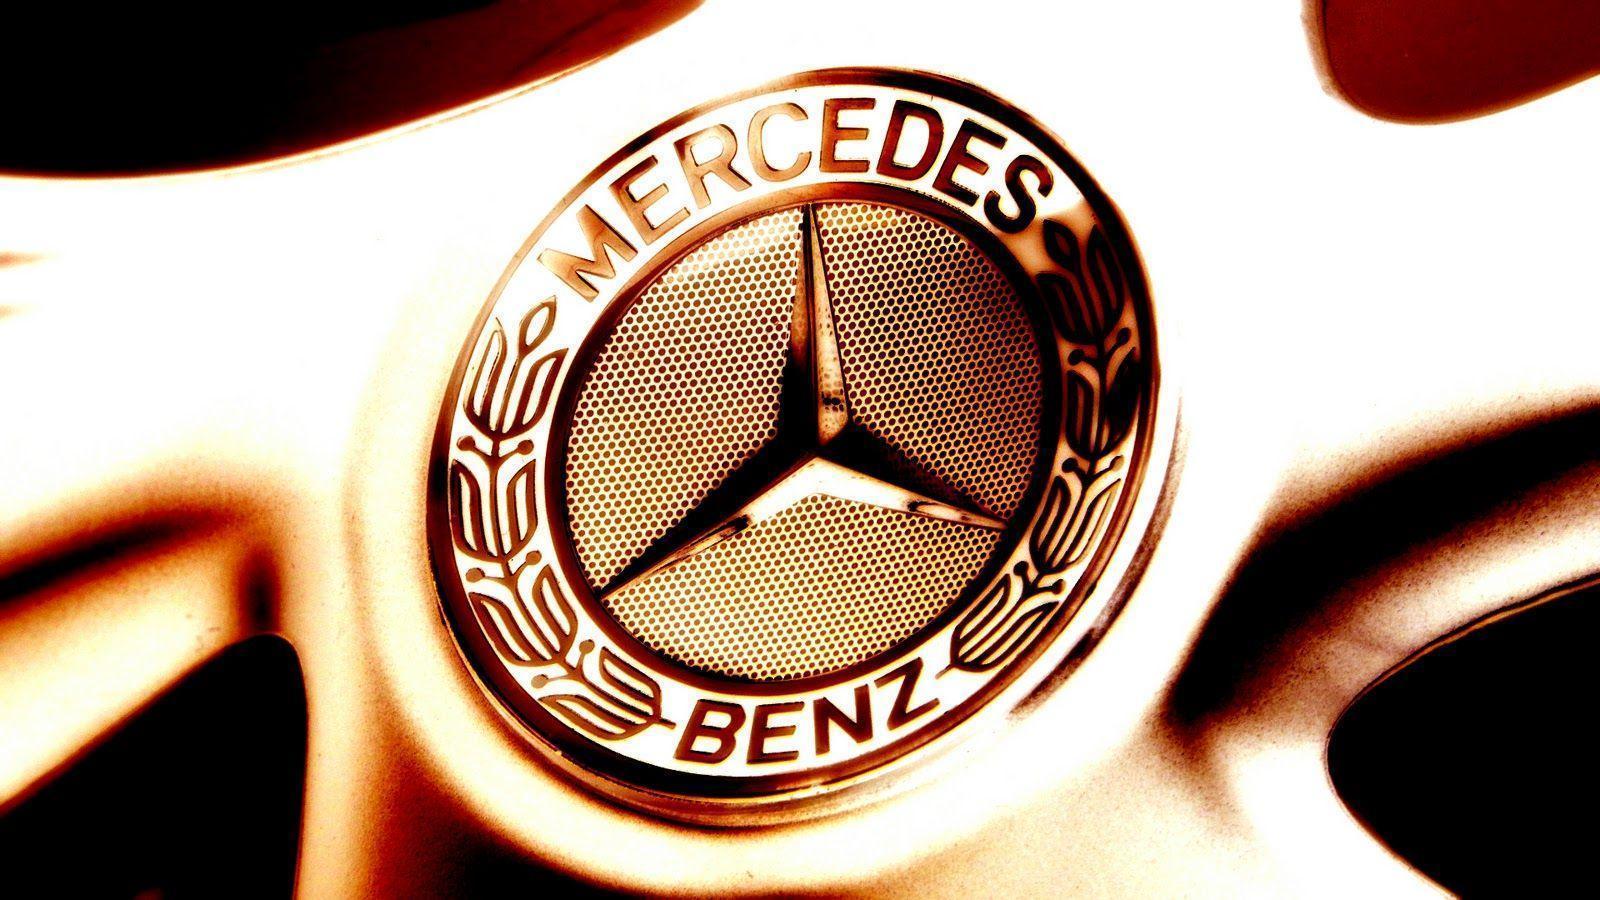 Remarkable Mercedes Benz Logo Wallpaper